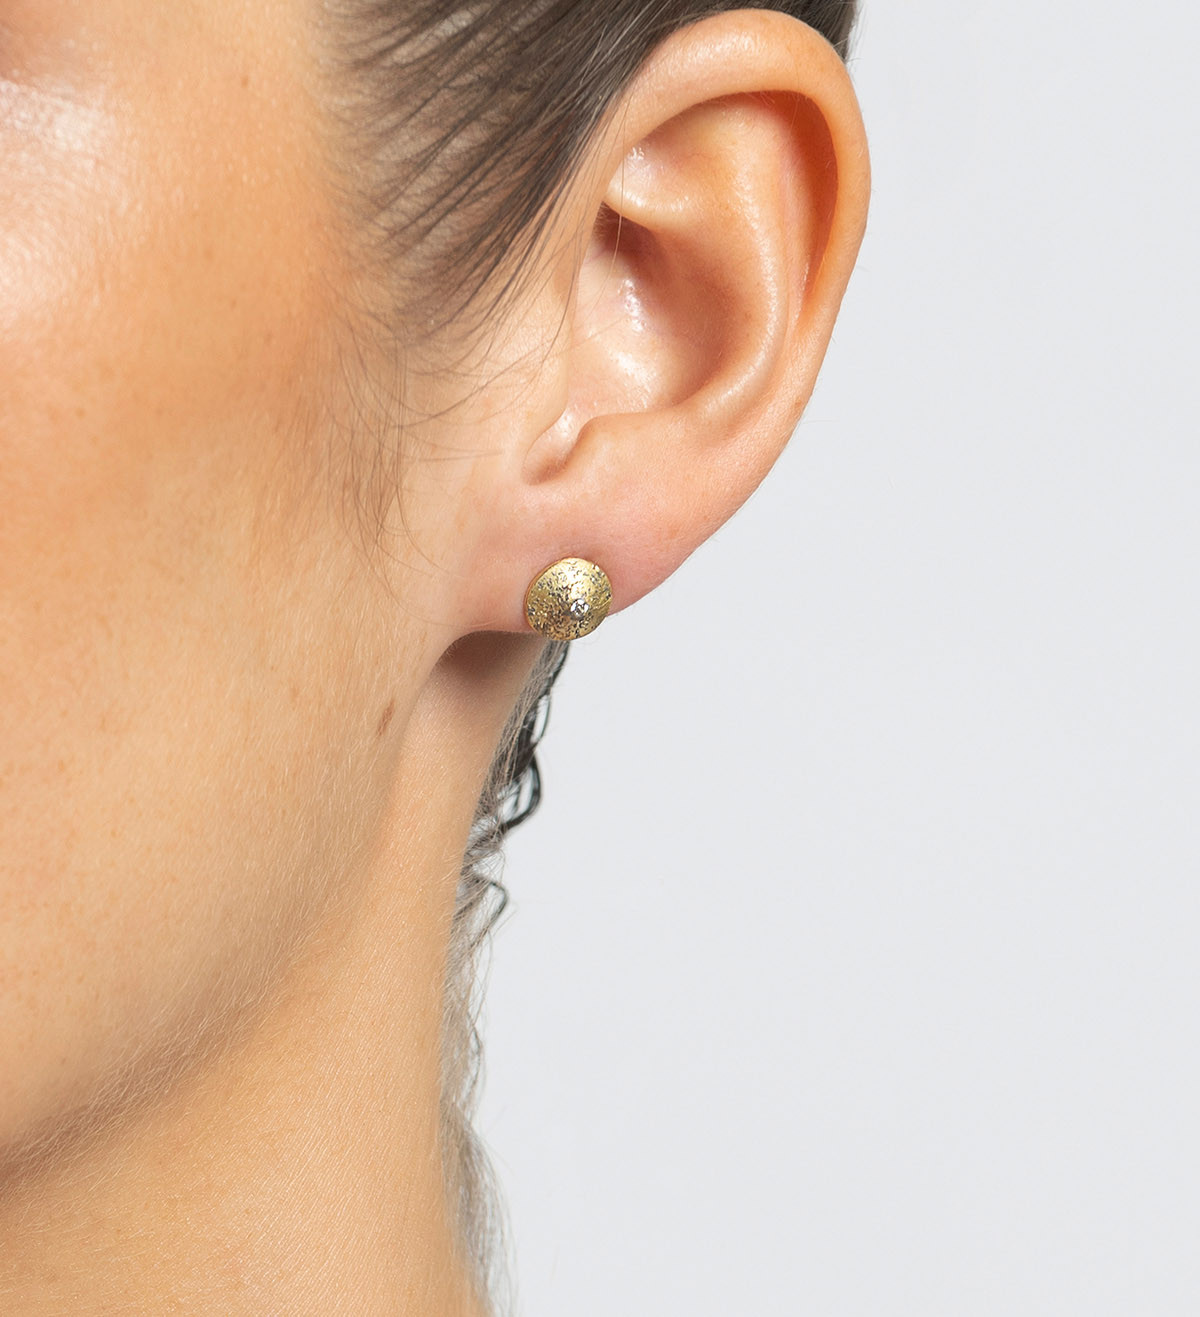 18k gold, paladium and diamonds earrings Bosc 8mm